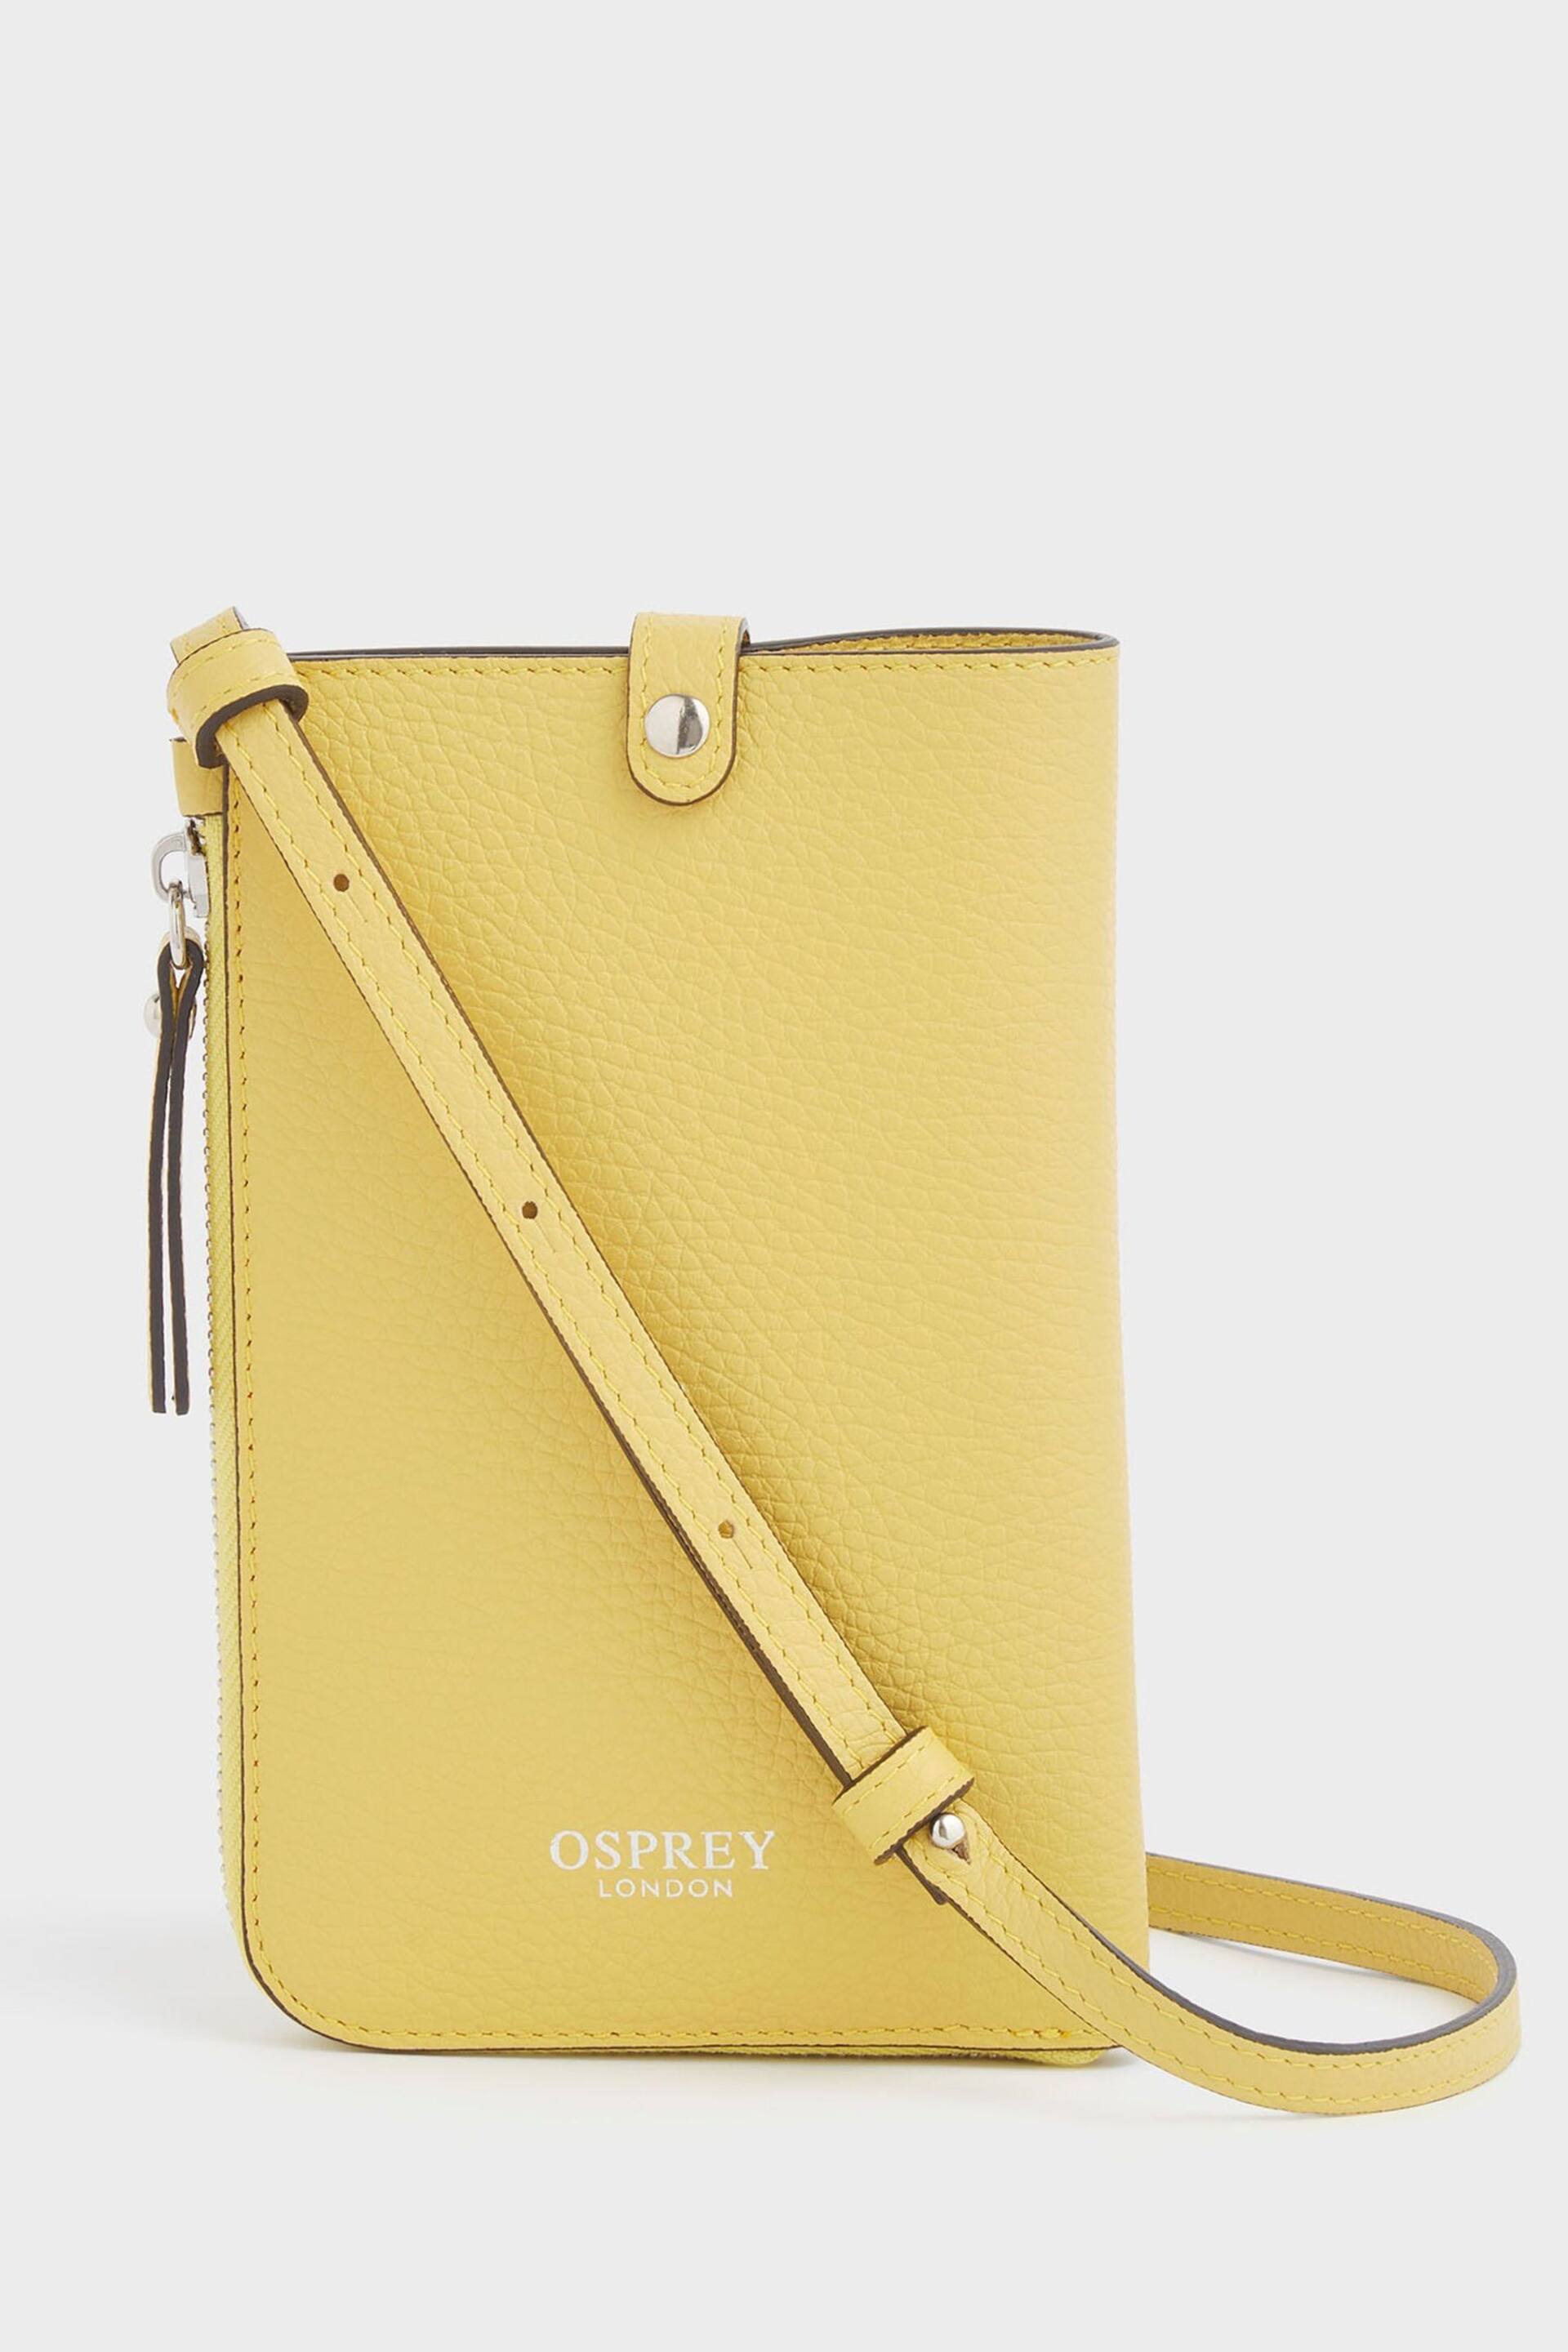 Osprey London The Electra Italian Leather Lanyard Phone Bag - Image 2 of 5